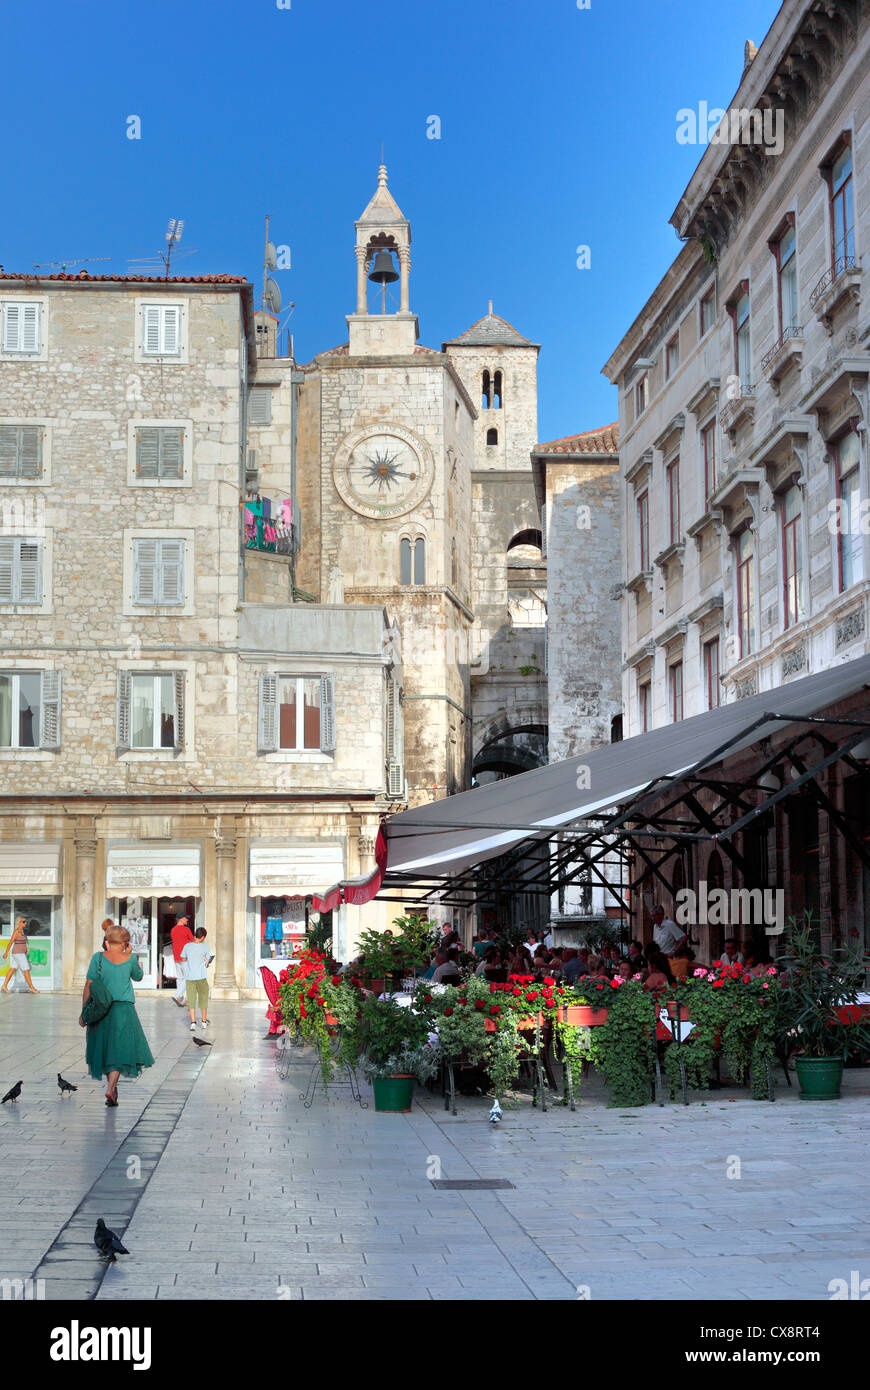 Clock tower and West Gate, Narodni Trg, Split, Dalmatia, Croatia Stock Photo